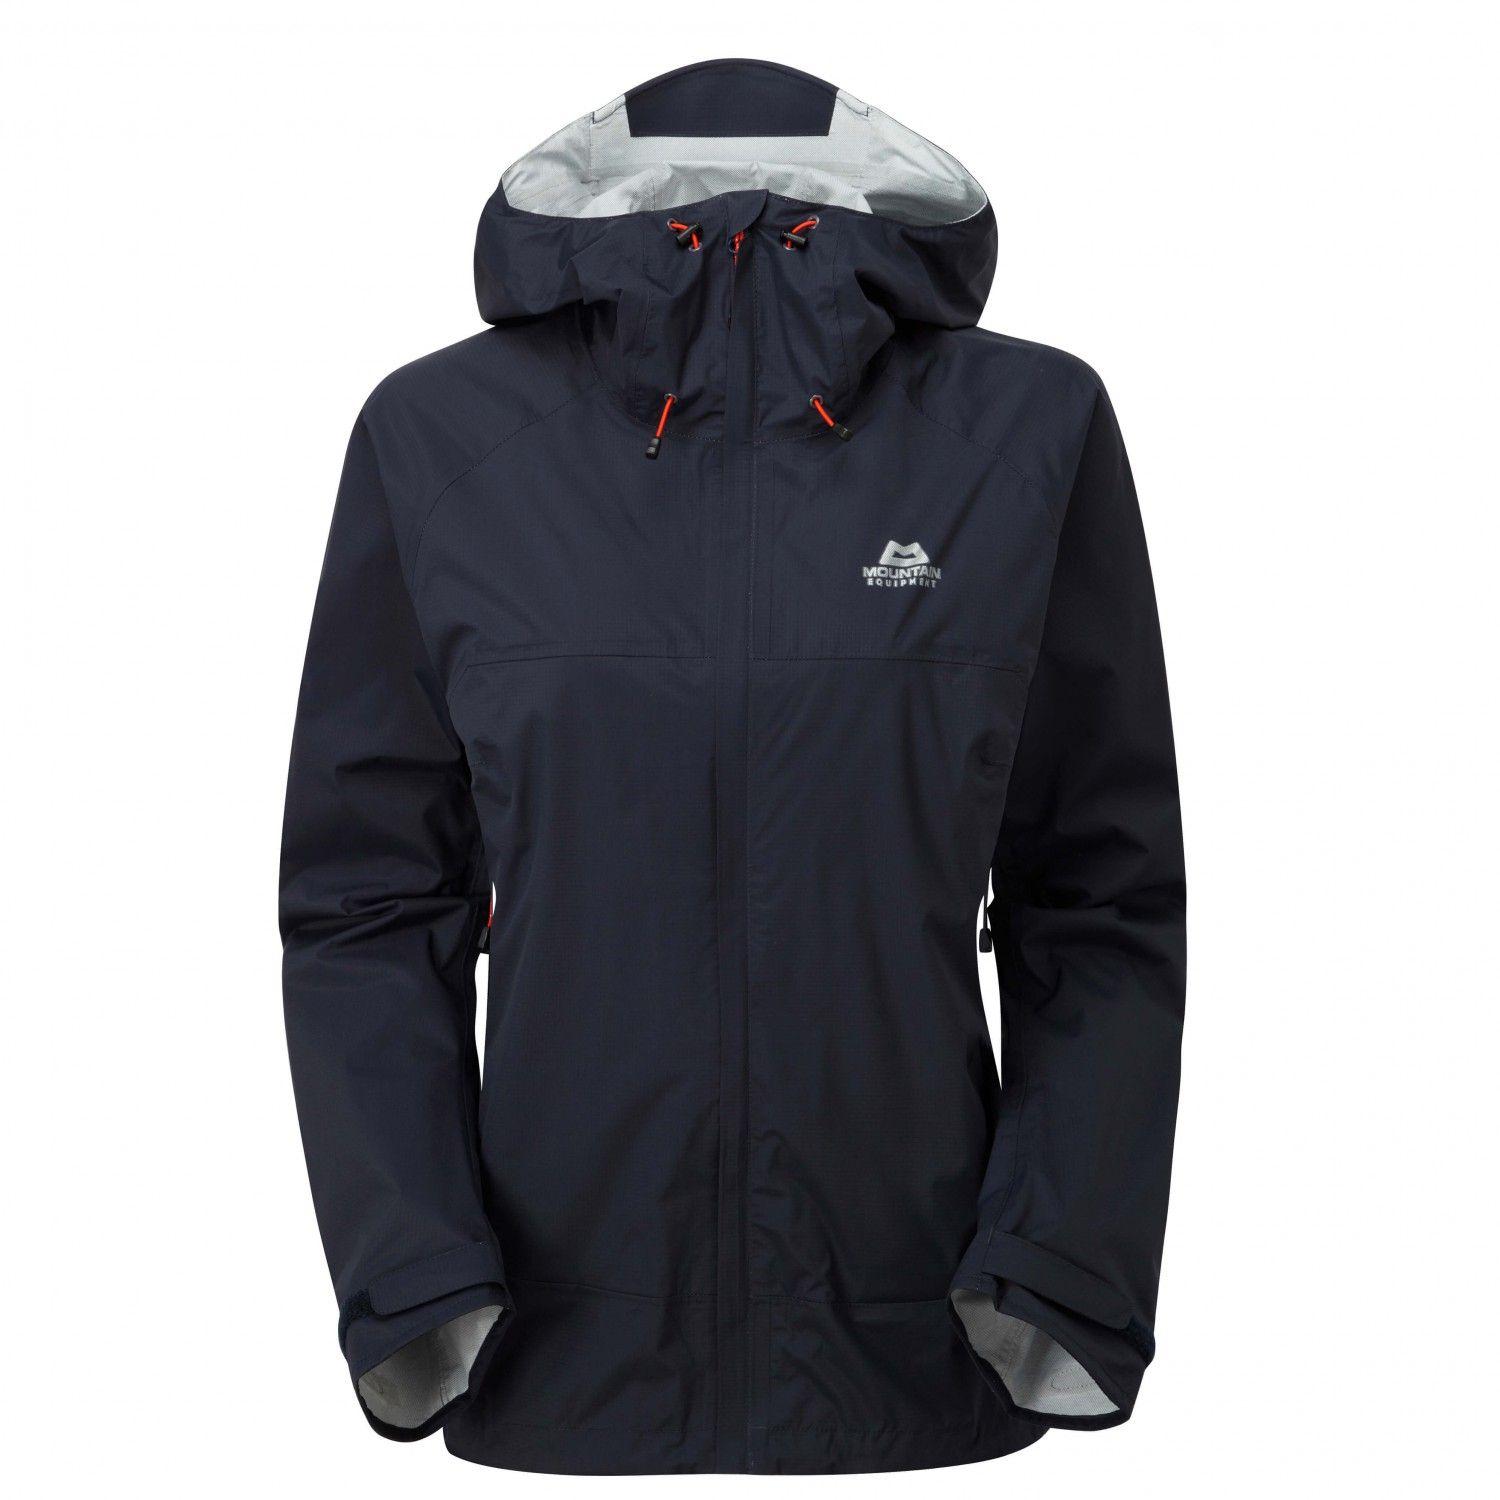 Mountain Outdoor Clothing Logo - Mountain Equipment Zeno Jacket Jacket Women's. Free UK